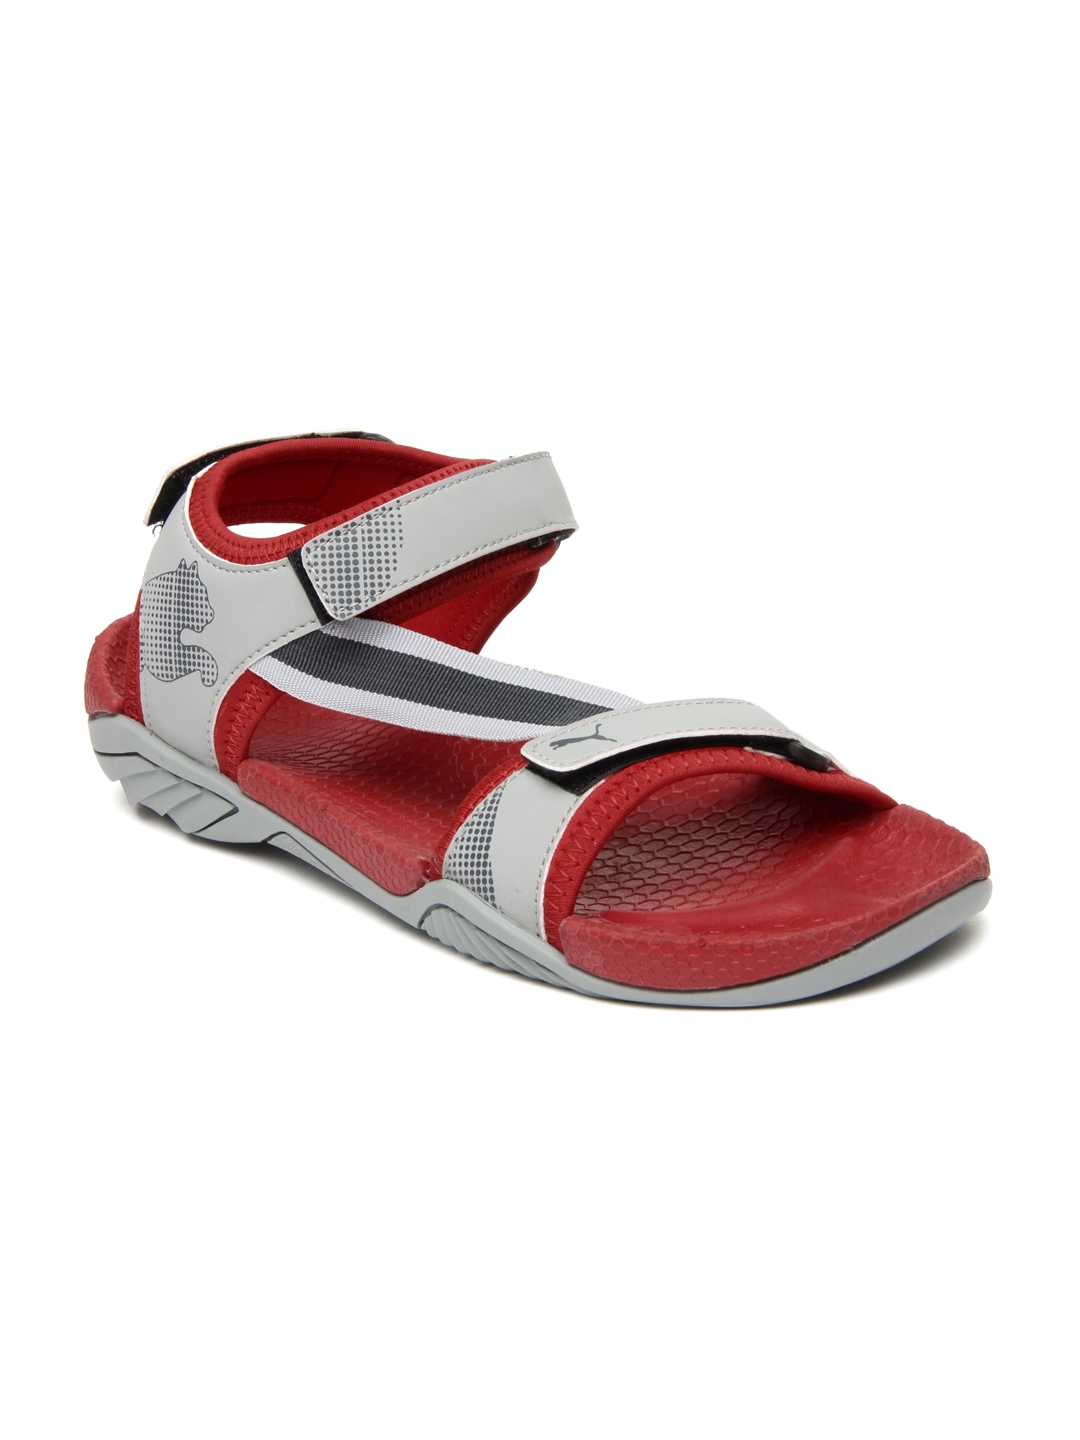 puma k9000 xc sandals buy online